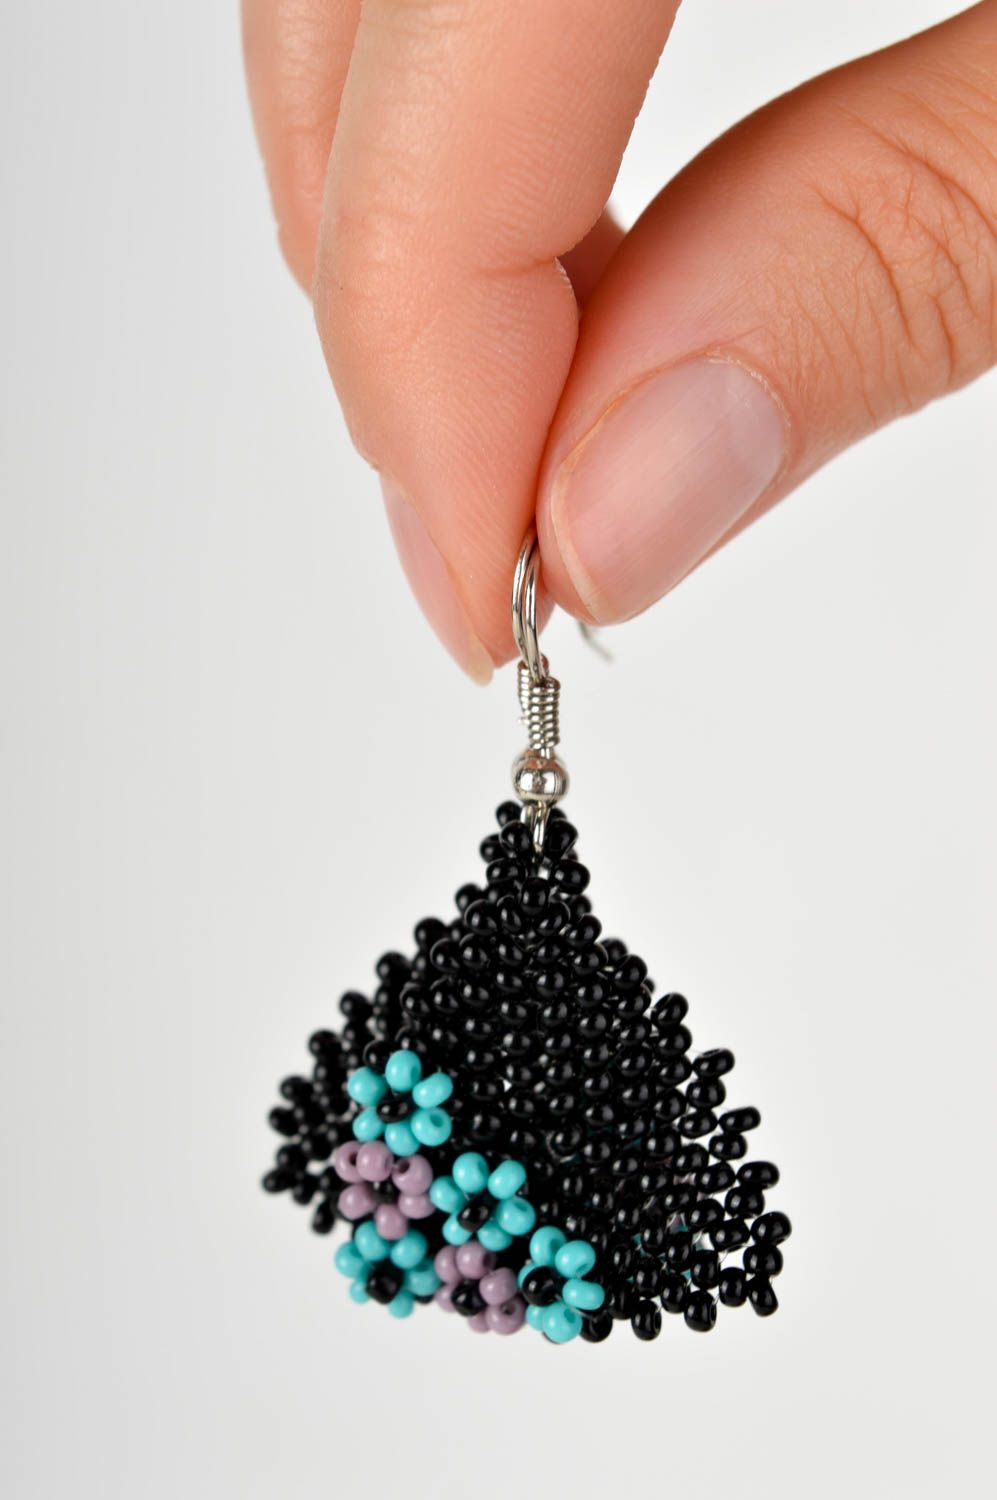 Unusual handmade beaded earrings fashion tips costume jewelry designs gift ideas photo 4